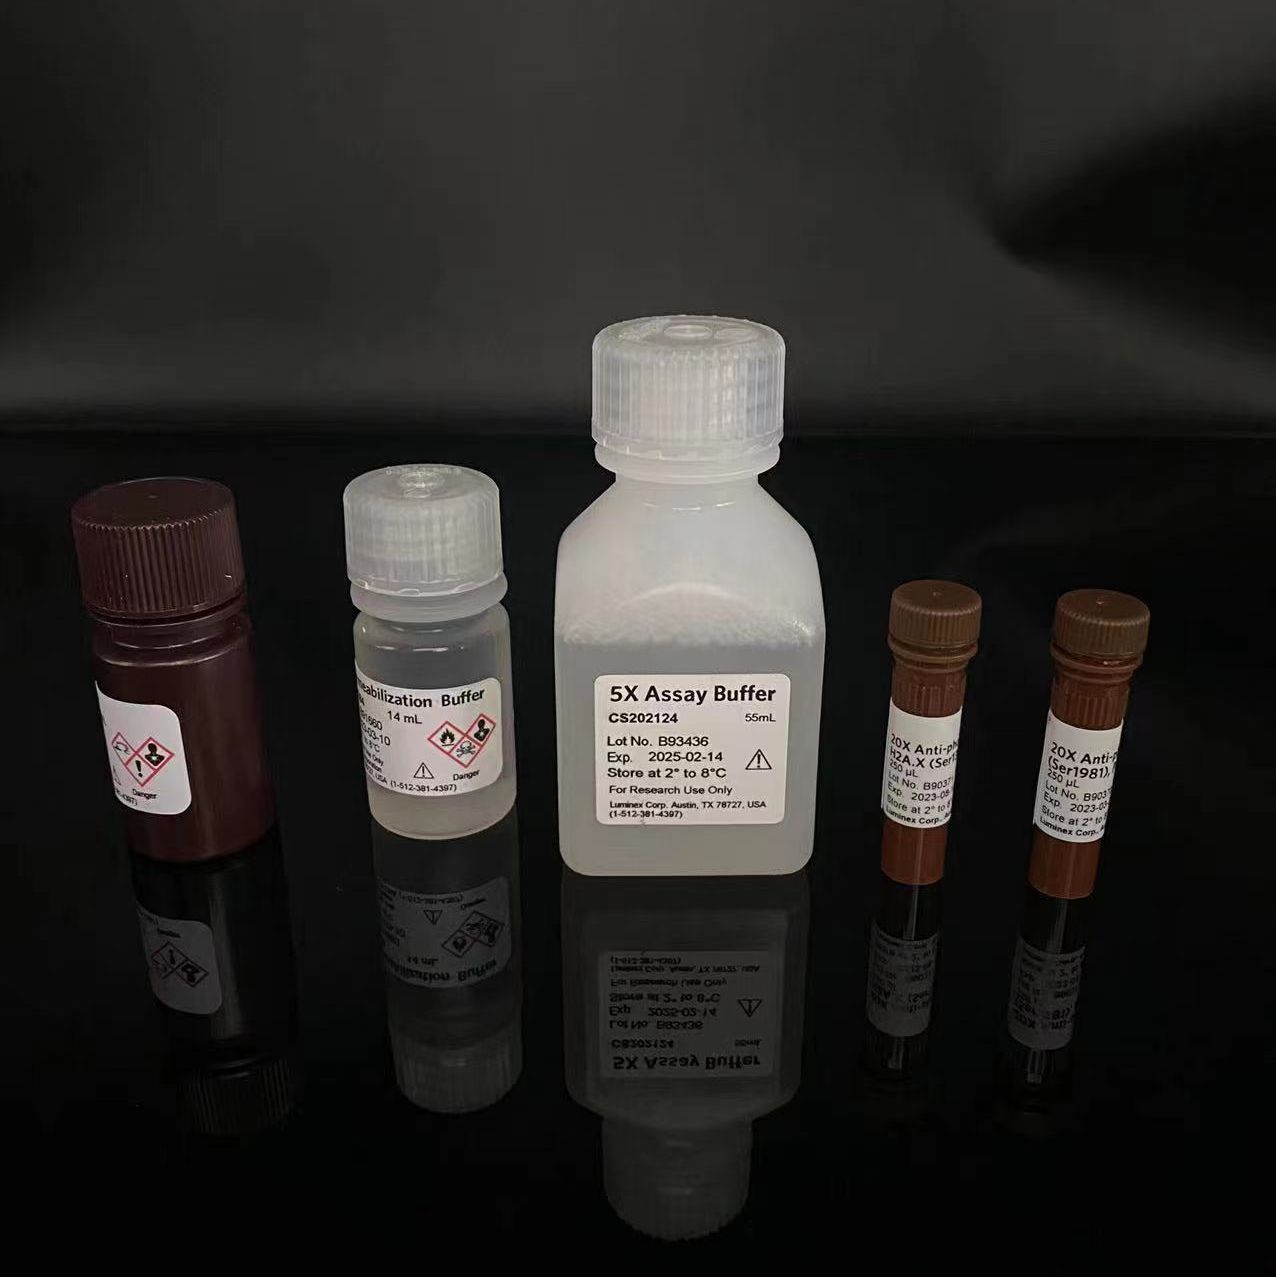 吡虫啉 Imidacloprid 标准品